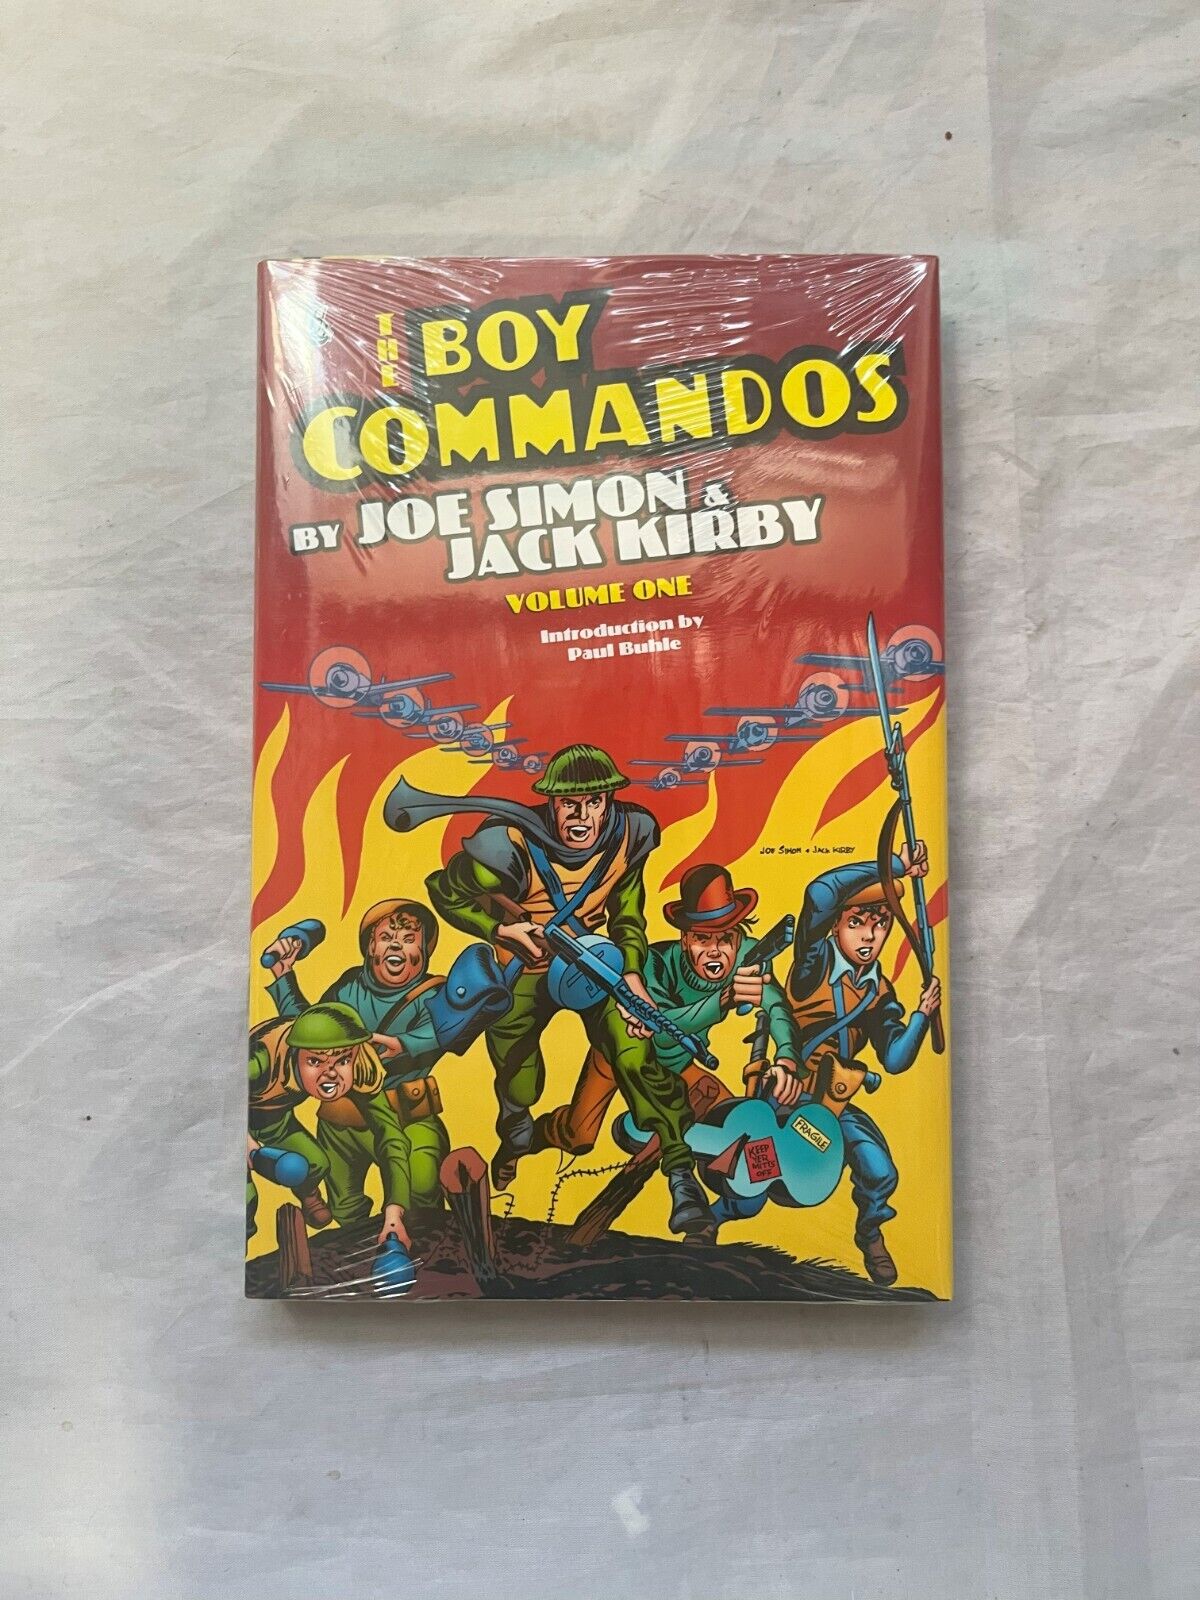 The Boy Commandos by Joe Simon & Jack Kirby Volume 1